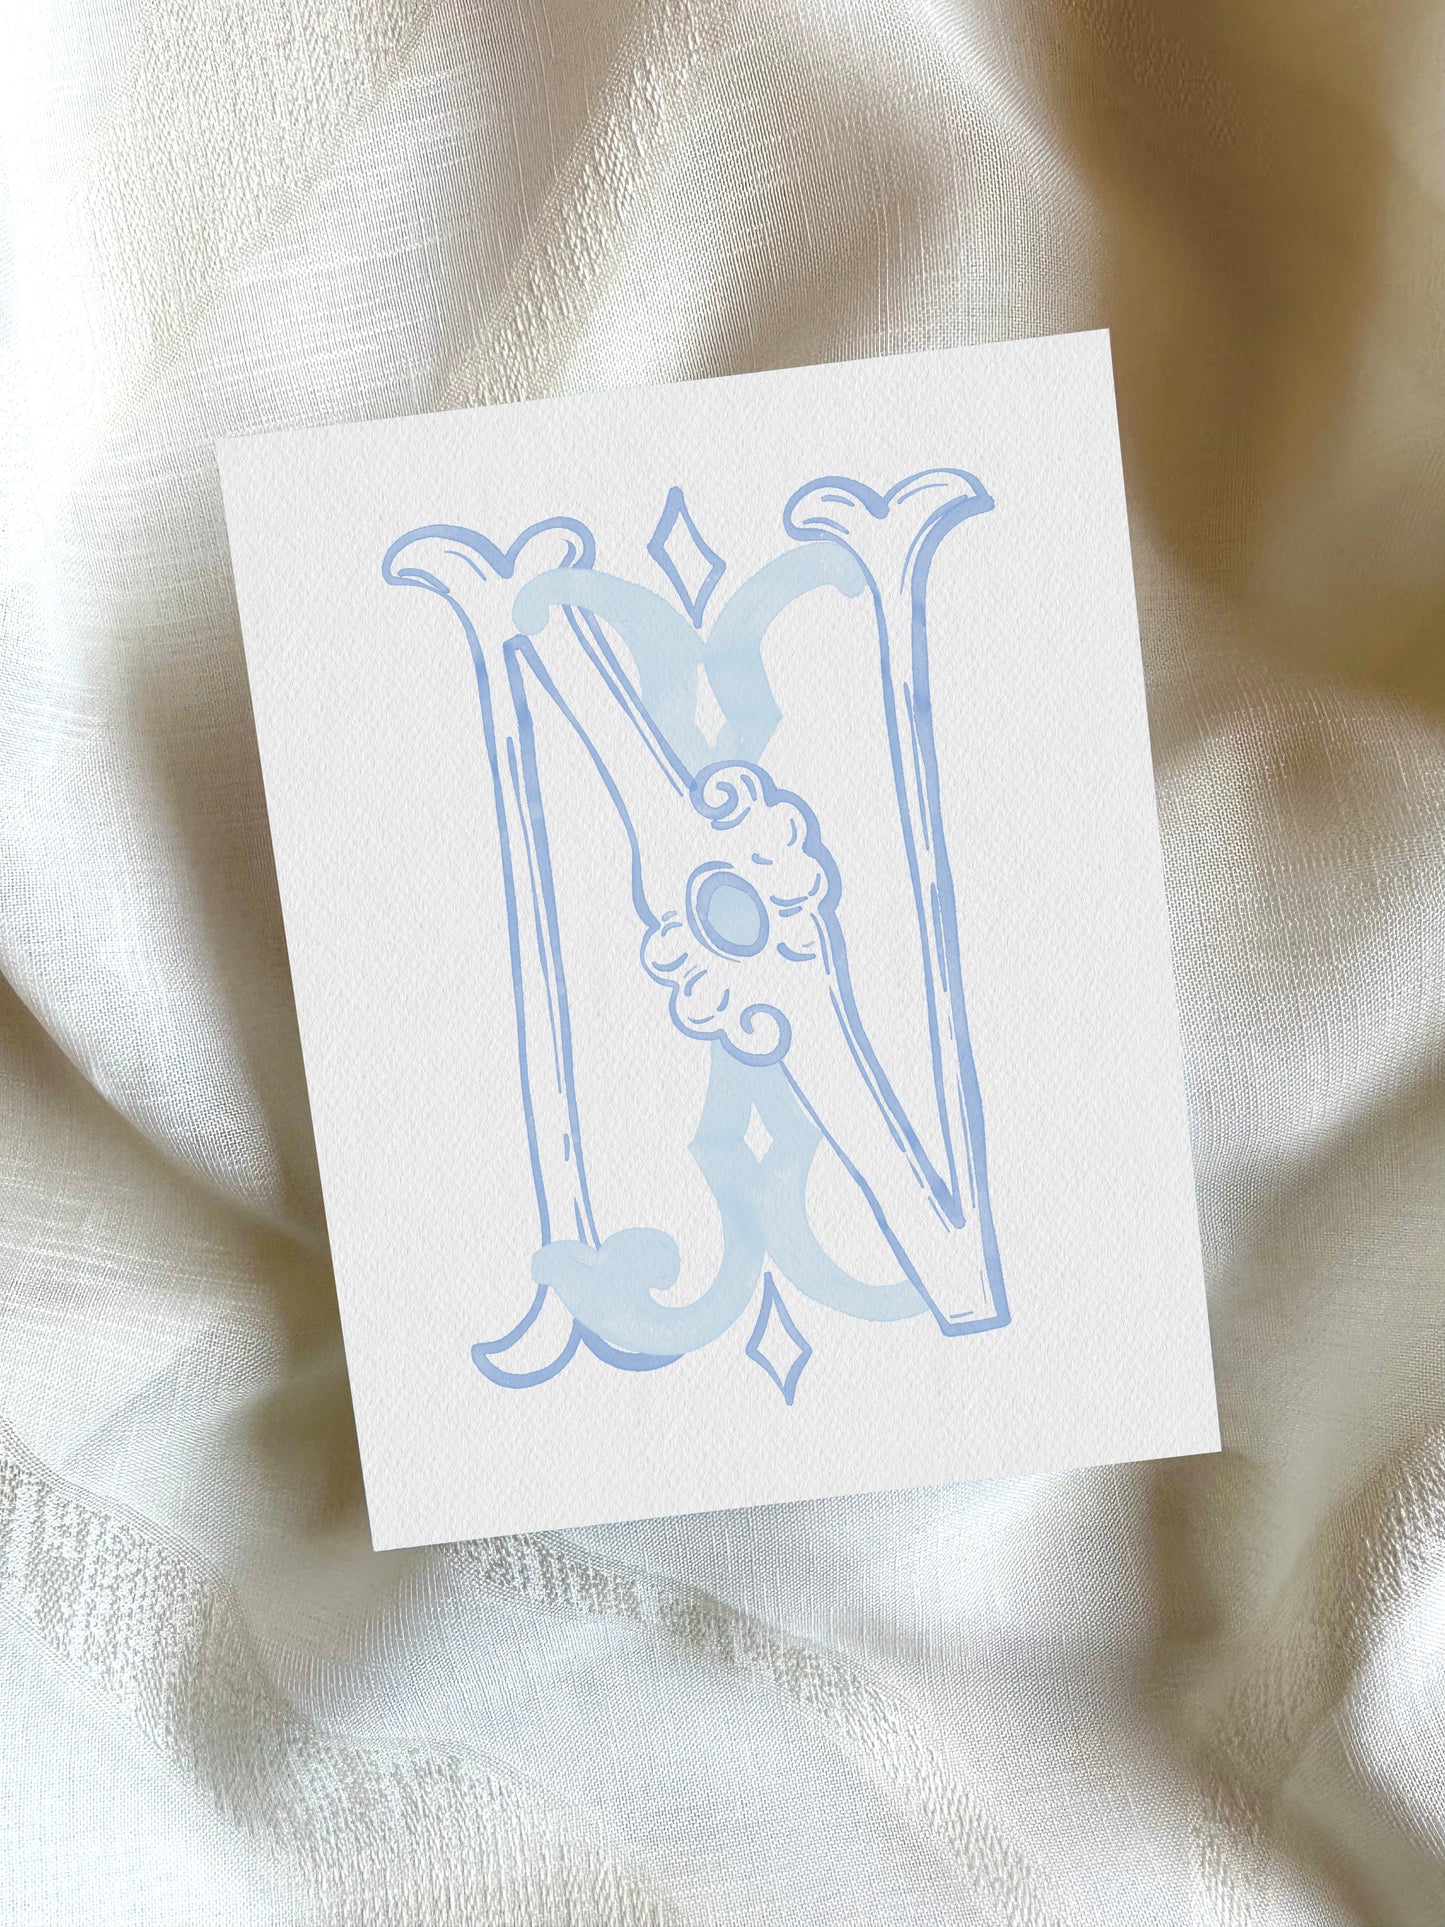 2 Letter Monogram with Letters JN NJ | Digital Download - Wedding Monogram SVG, Personal Logo, Wedding Logo for Wedding Invitations The Wedding Crest Lab